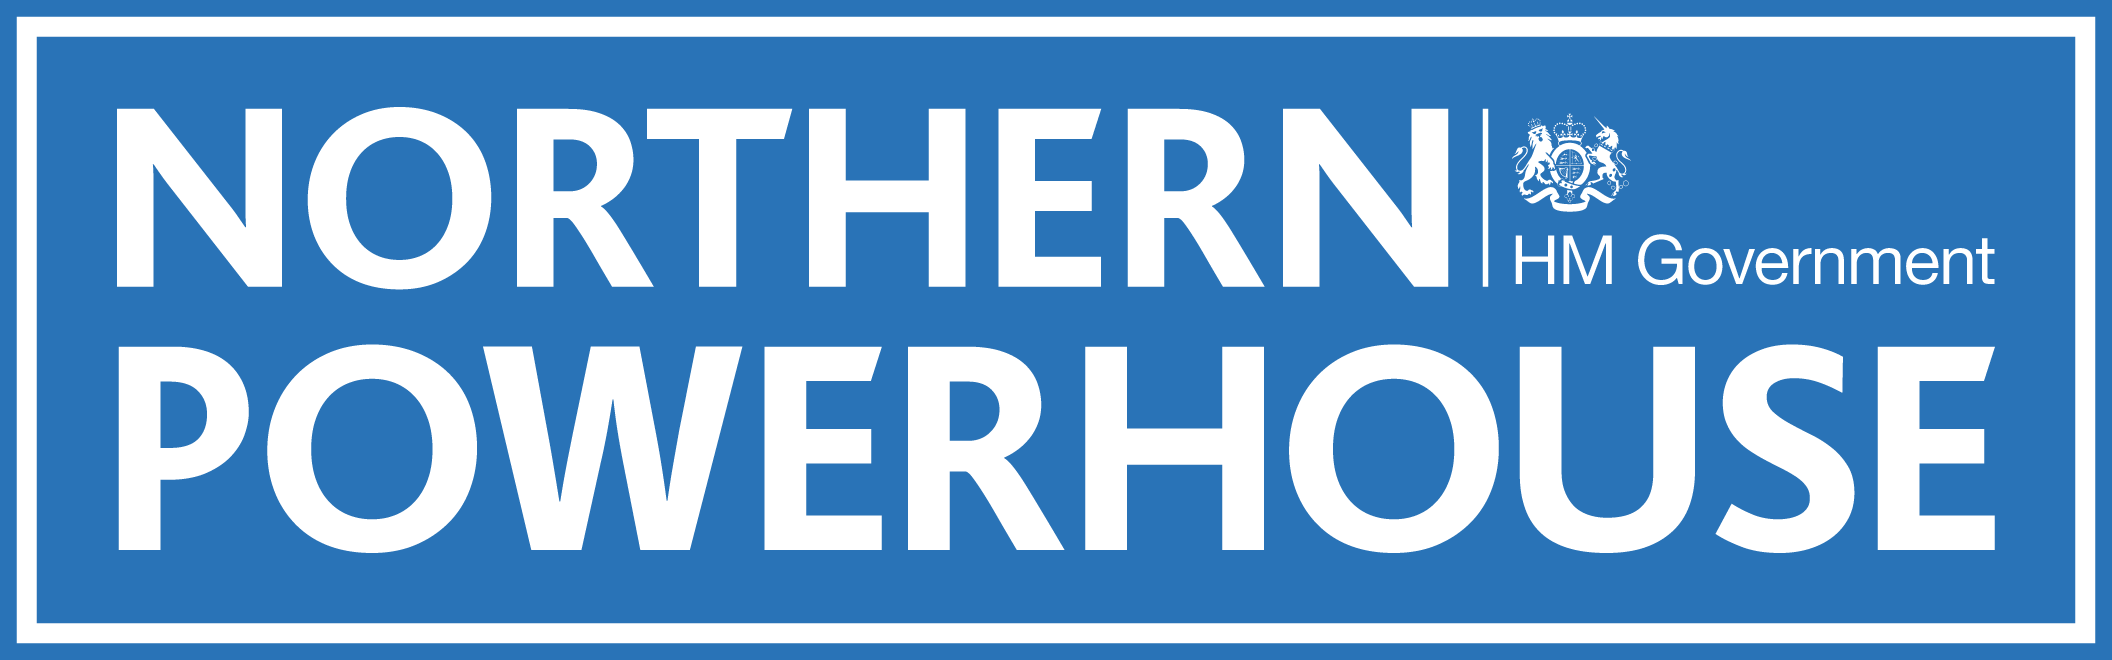 Northern Powerhouse Logo Blue-1-1